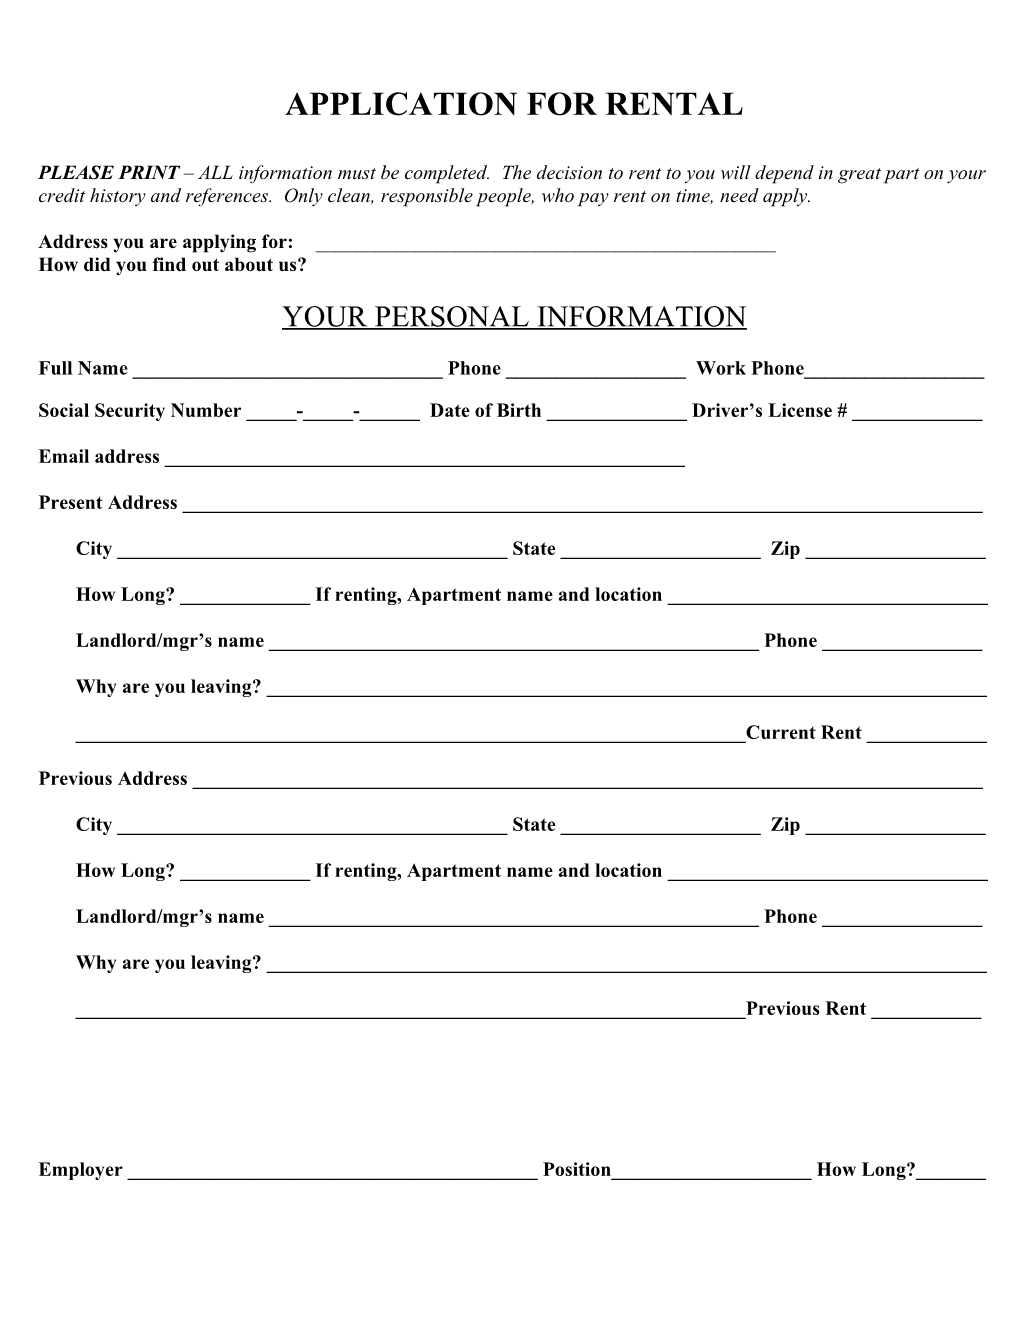 Application for Rental